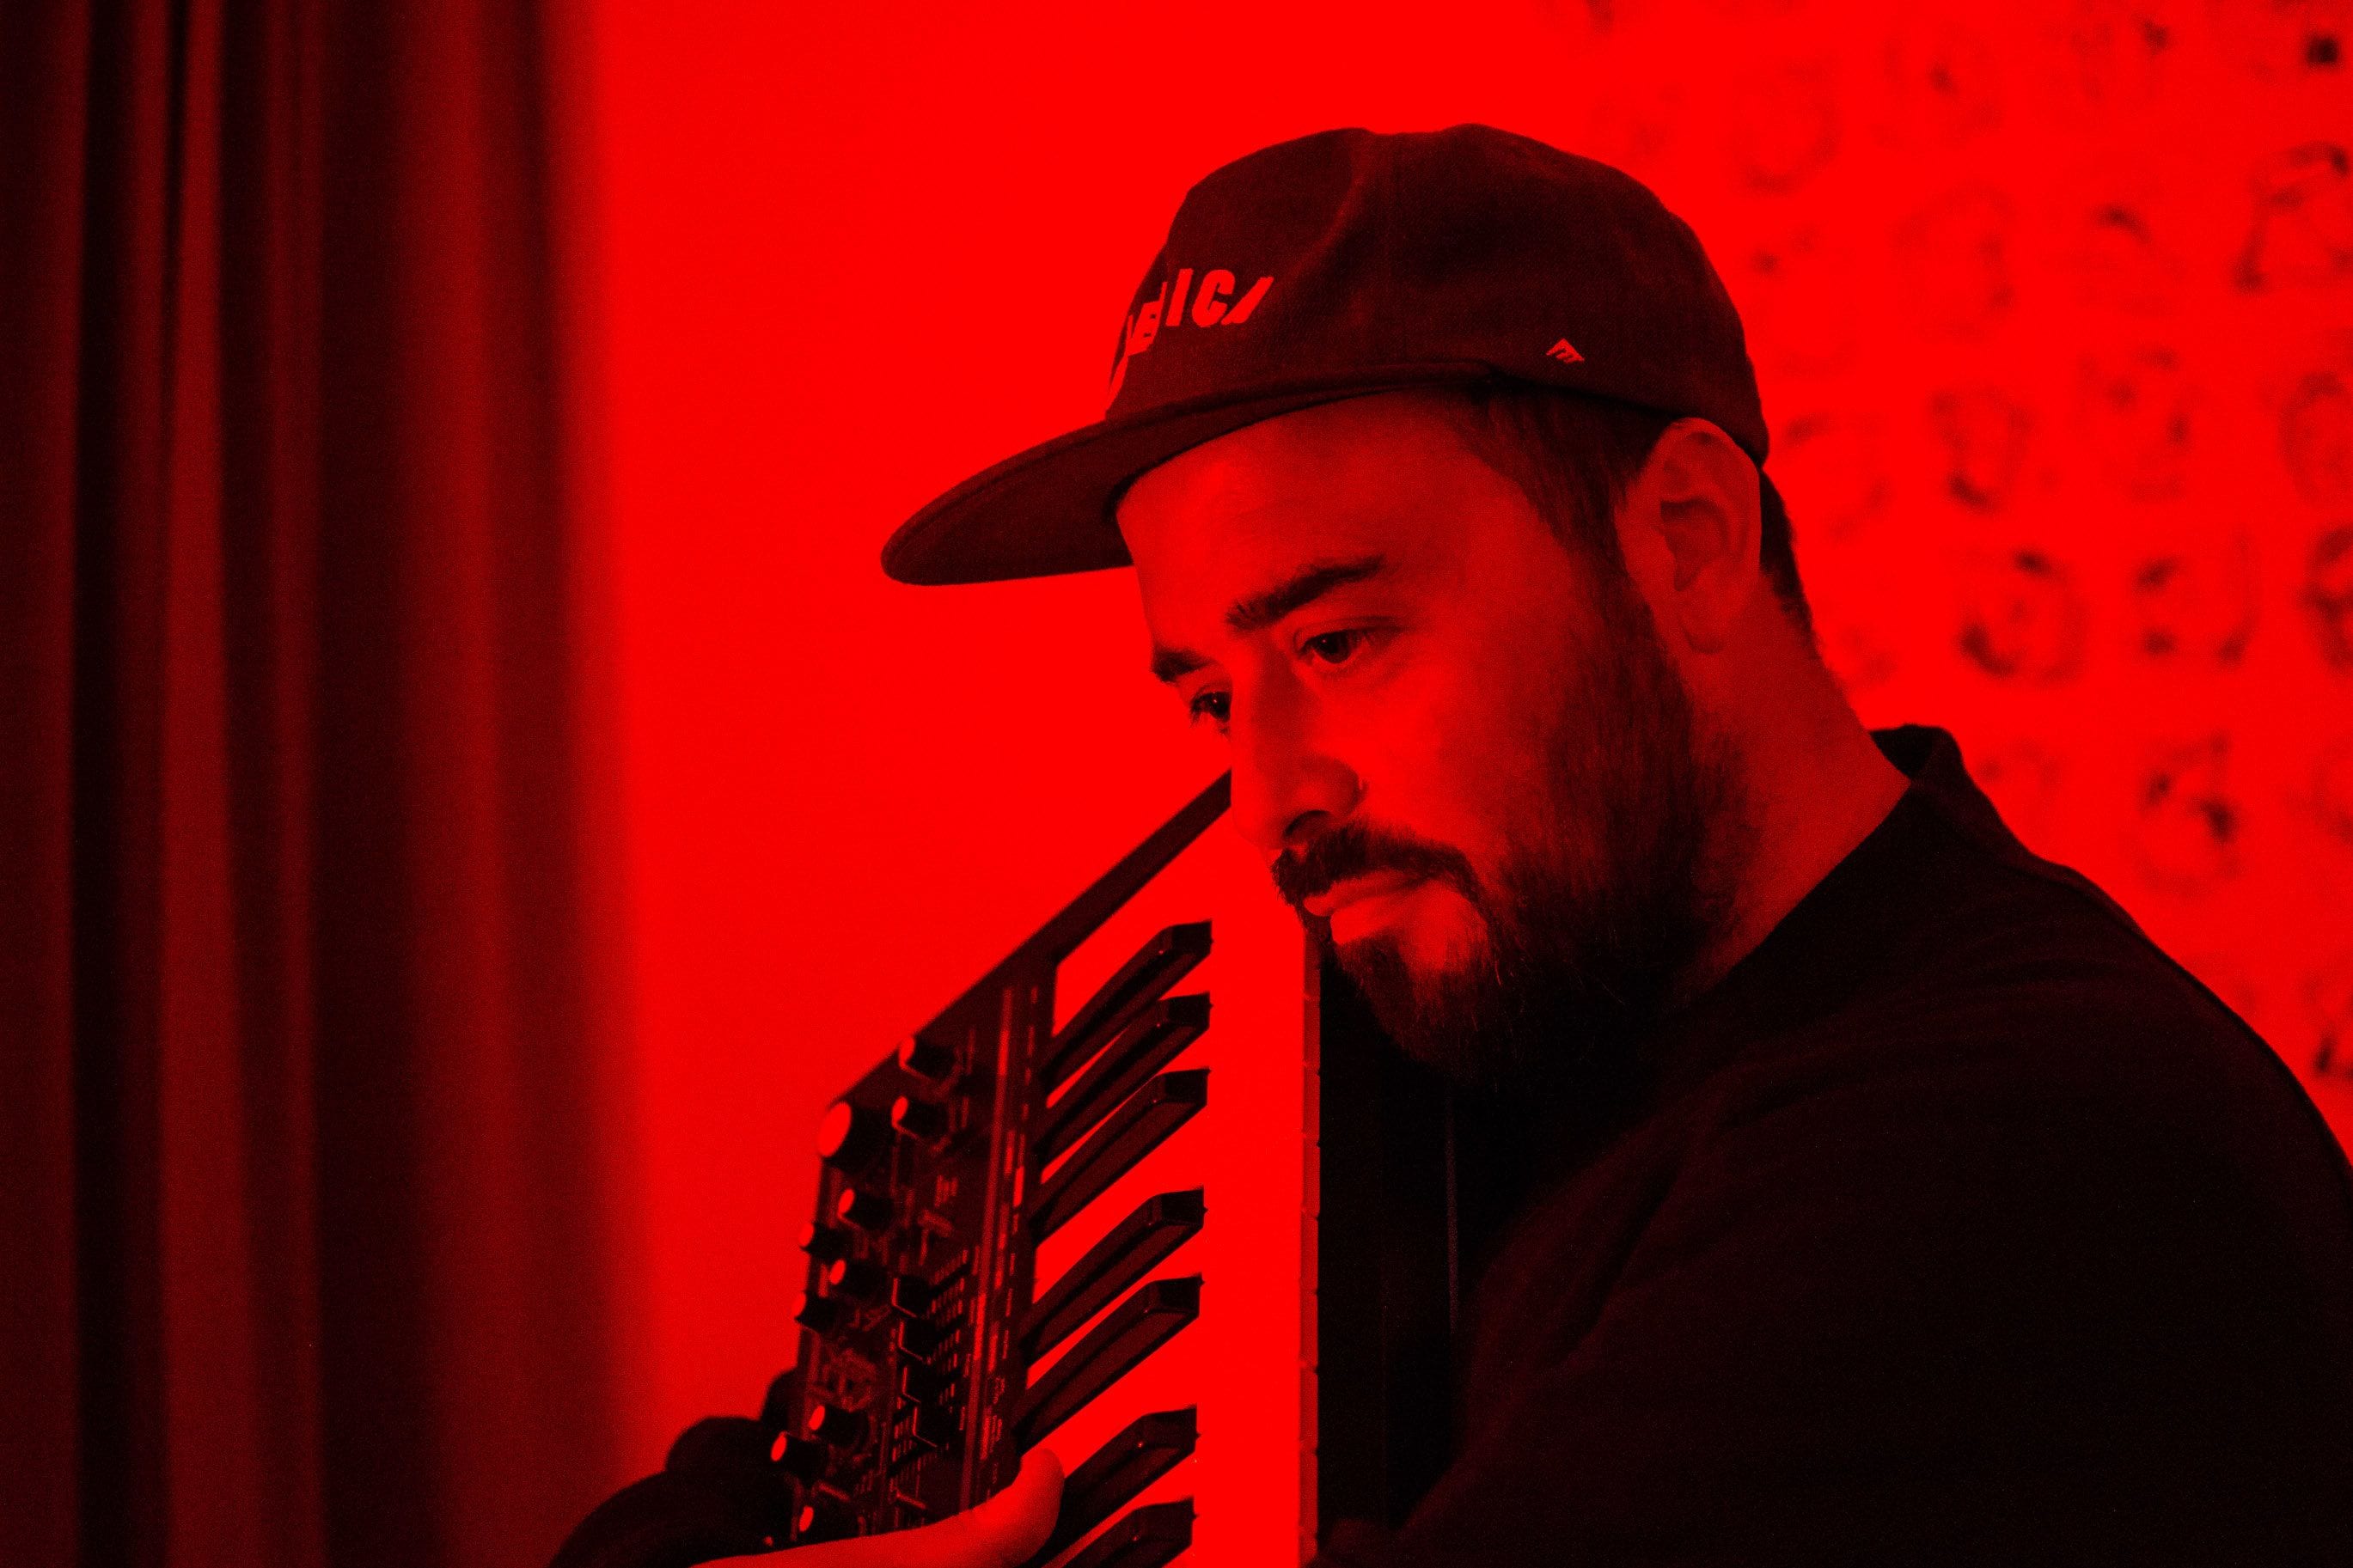 Fernando Lagreca Shares New Dynamic House Tune “Dissociation” (premiere)